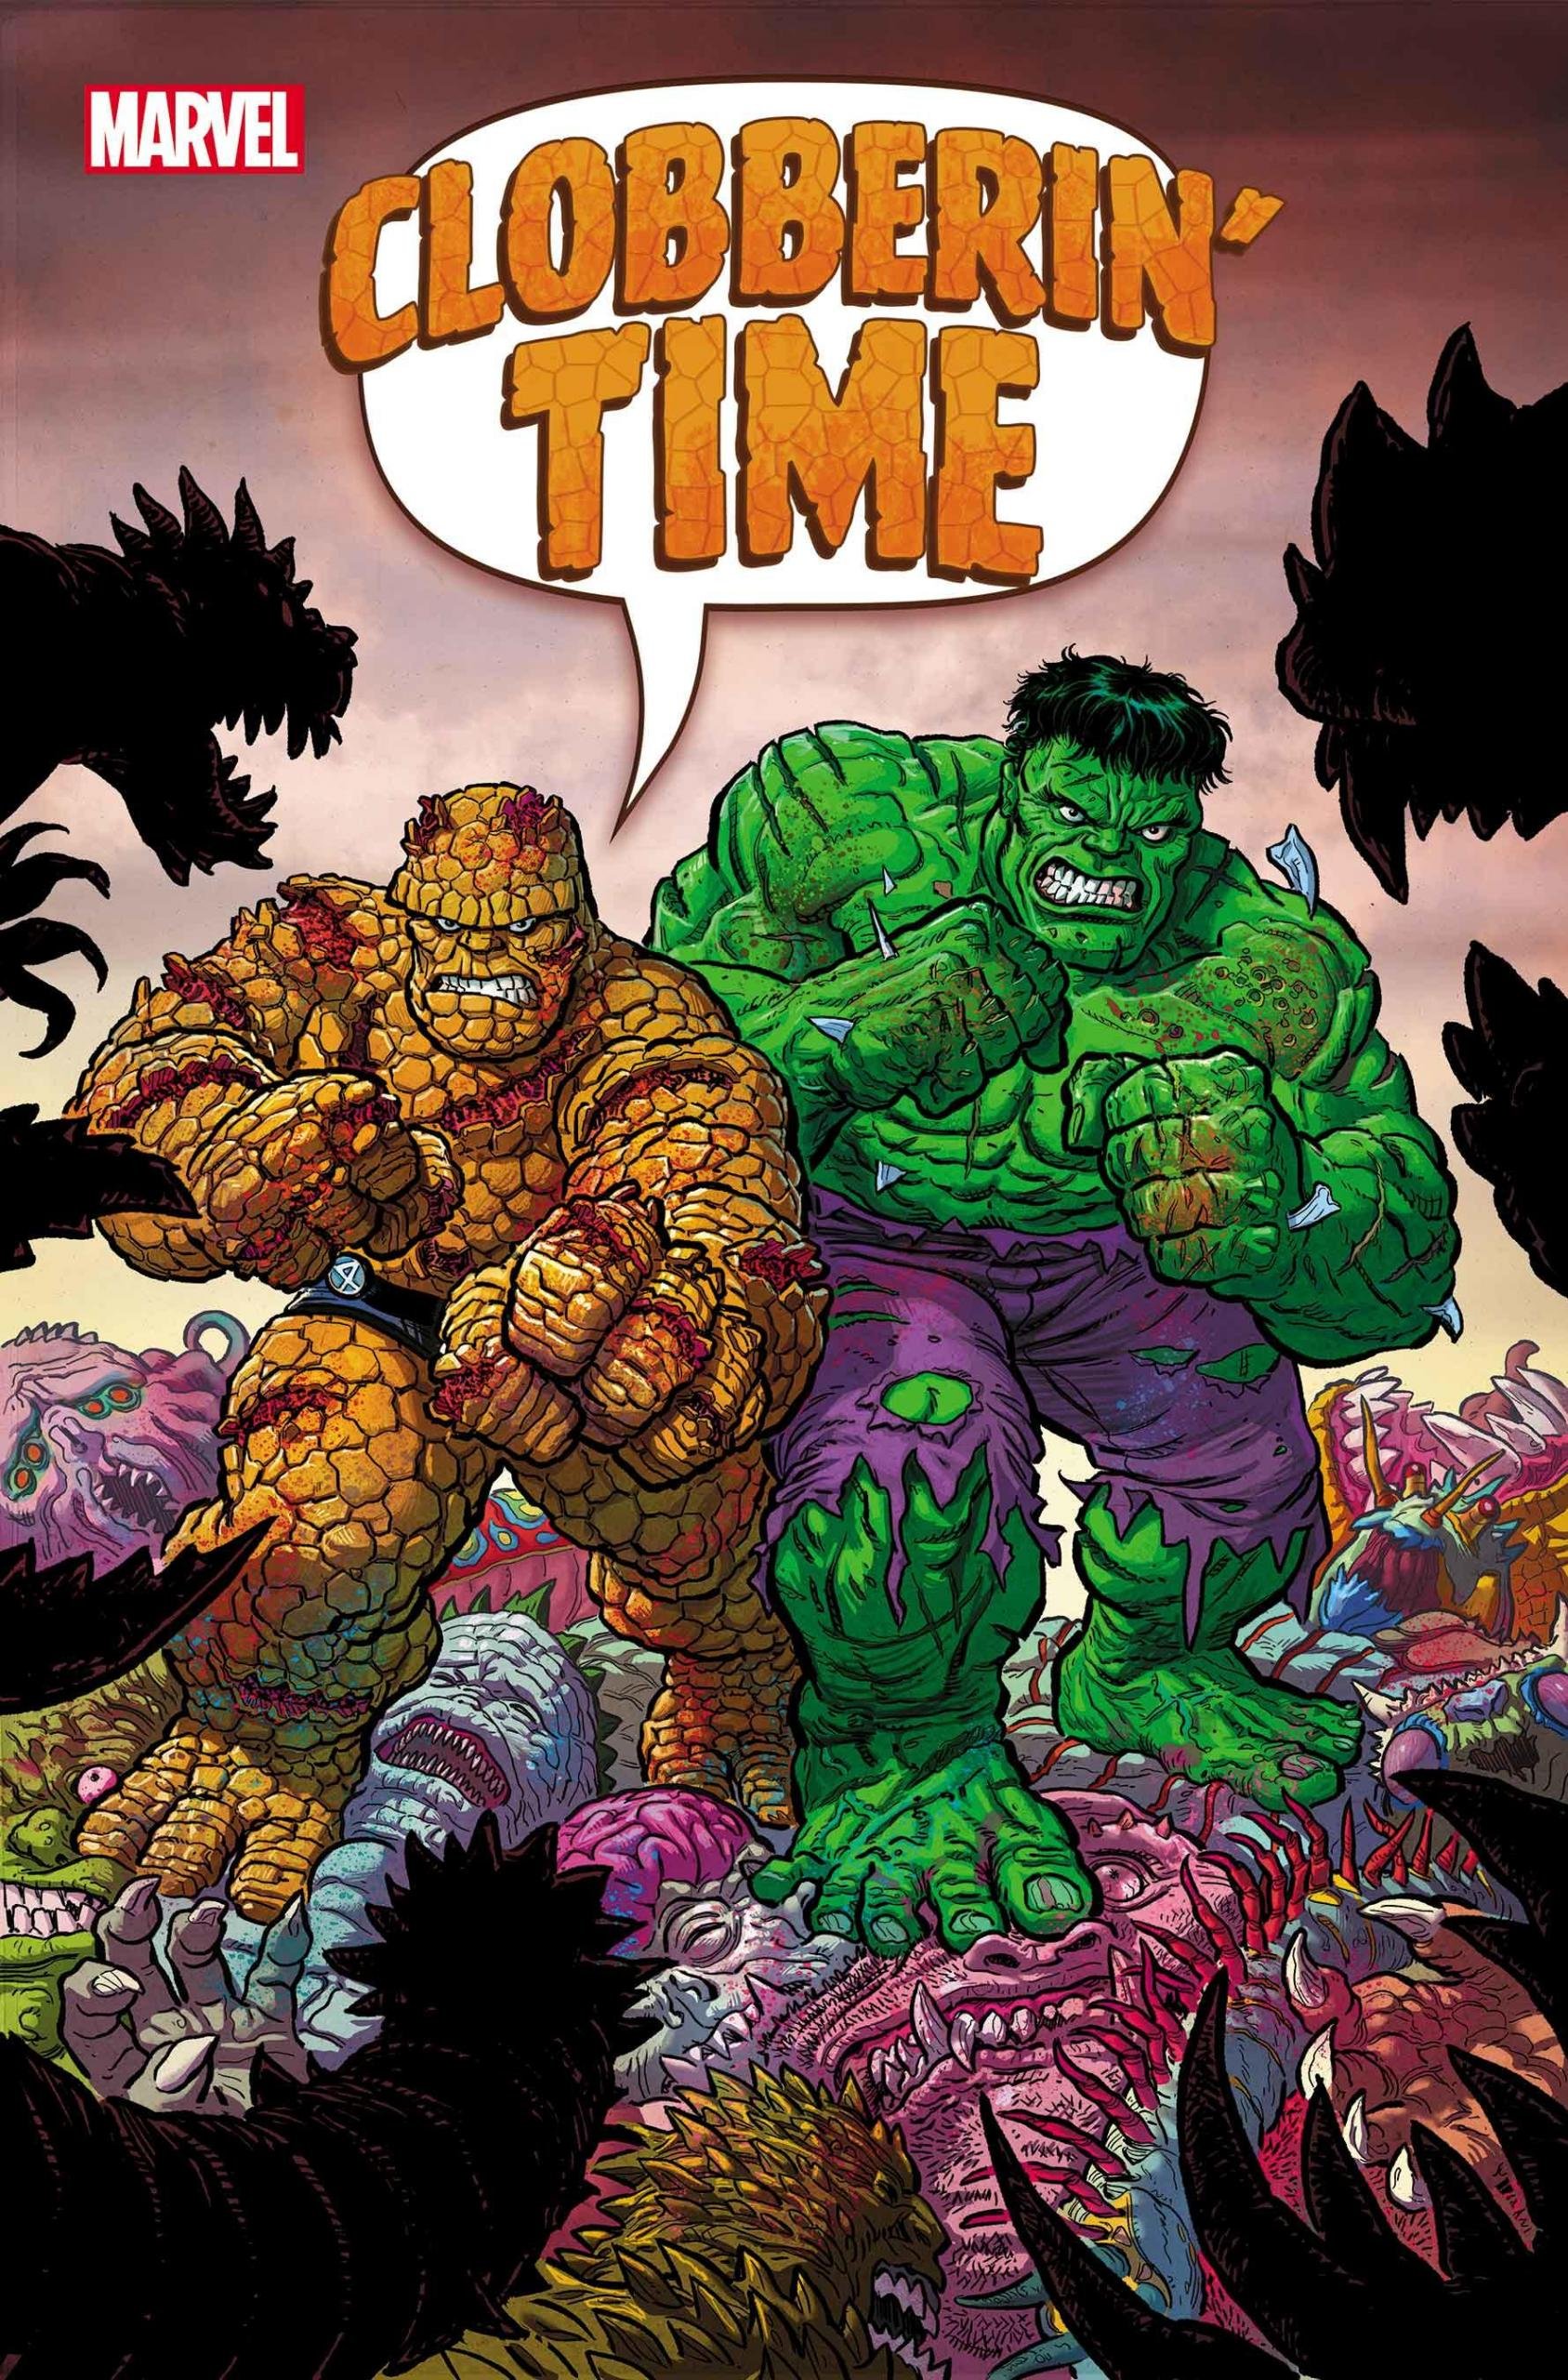 Cover di Cloberrin Time 1, la miniserie team-up della Cosa di Steve Skroce